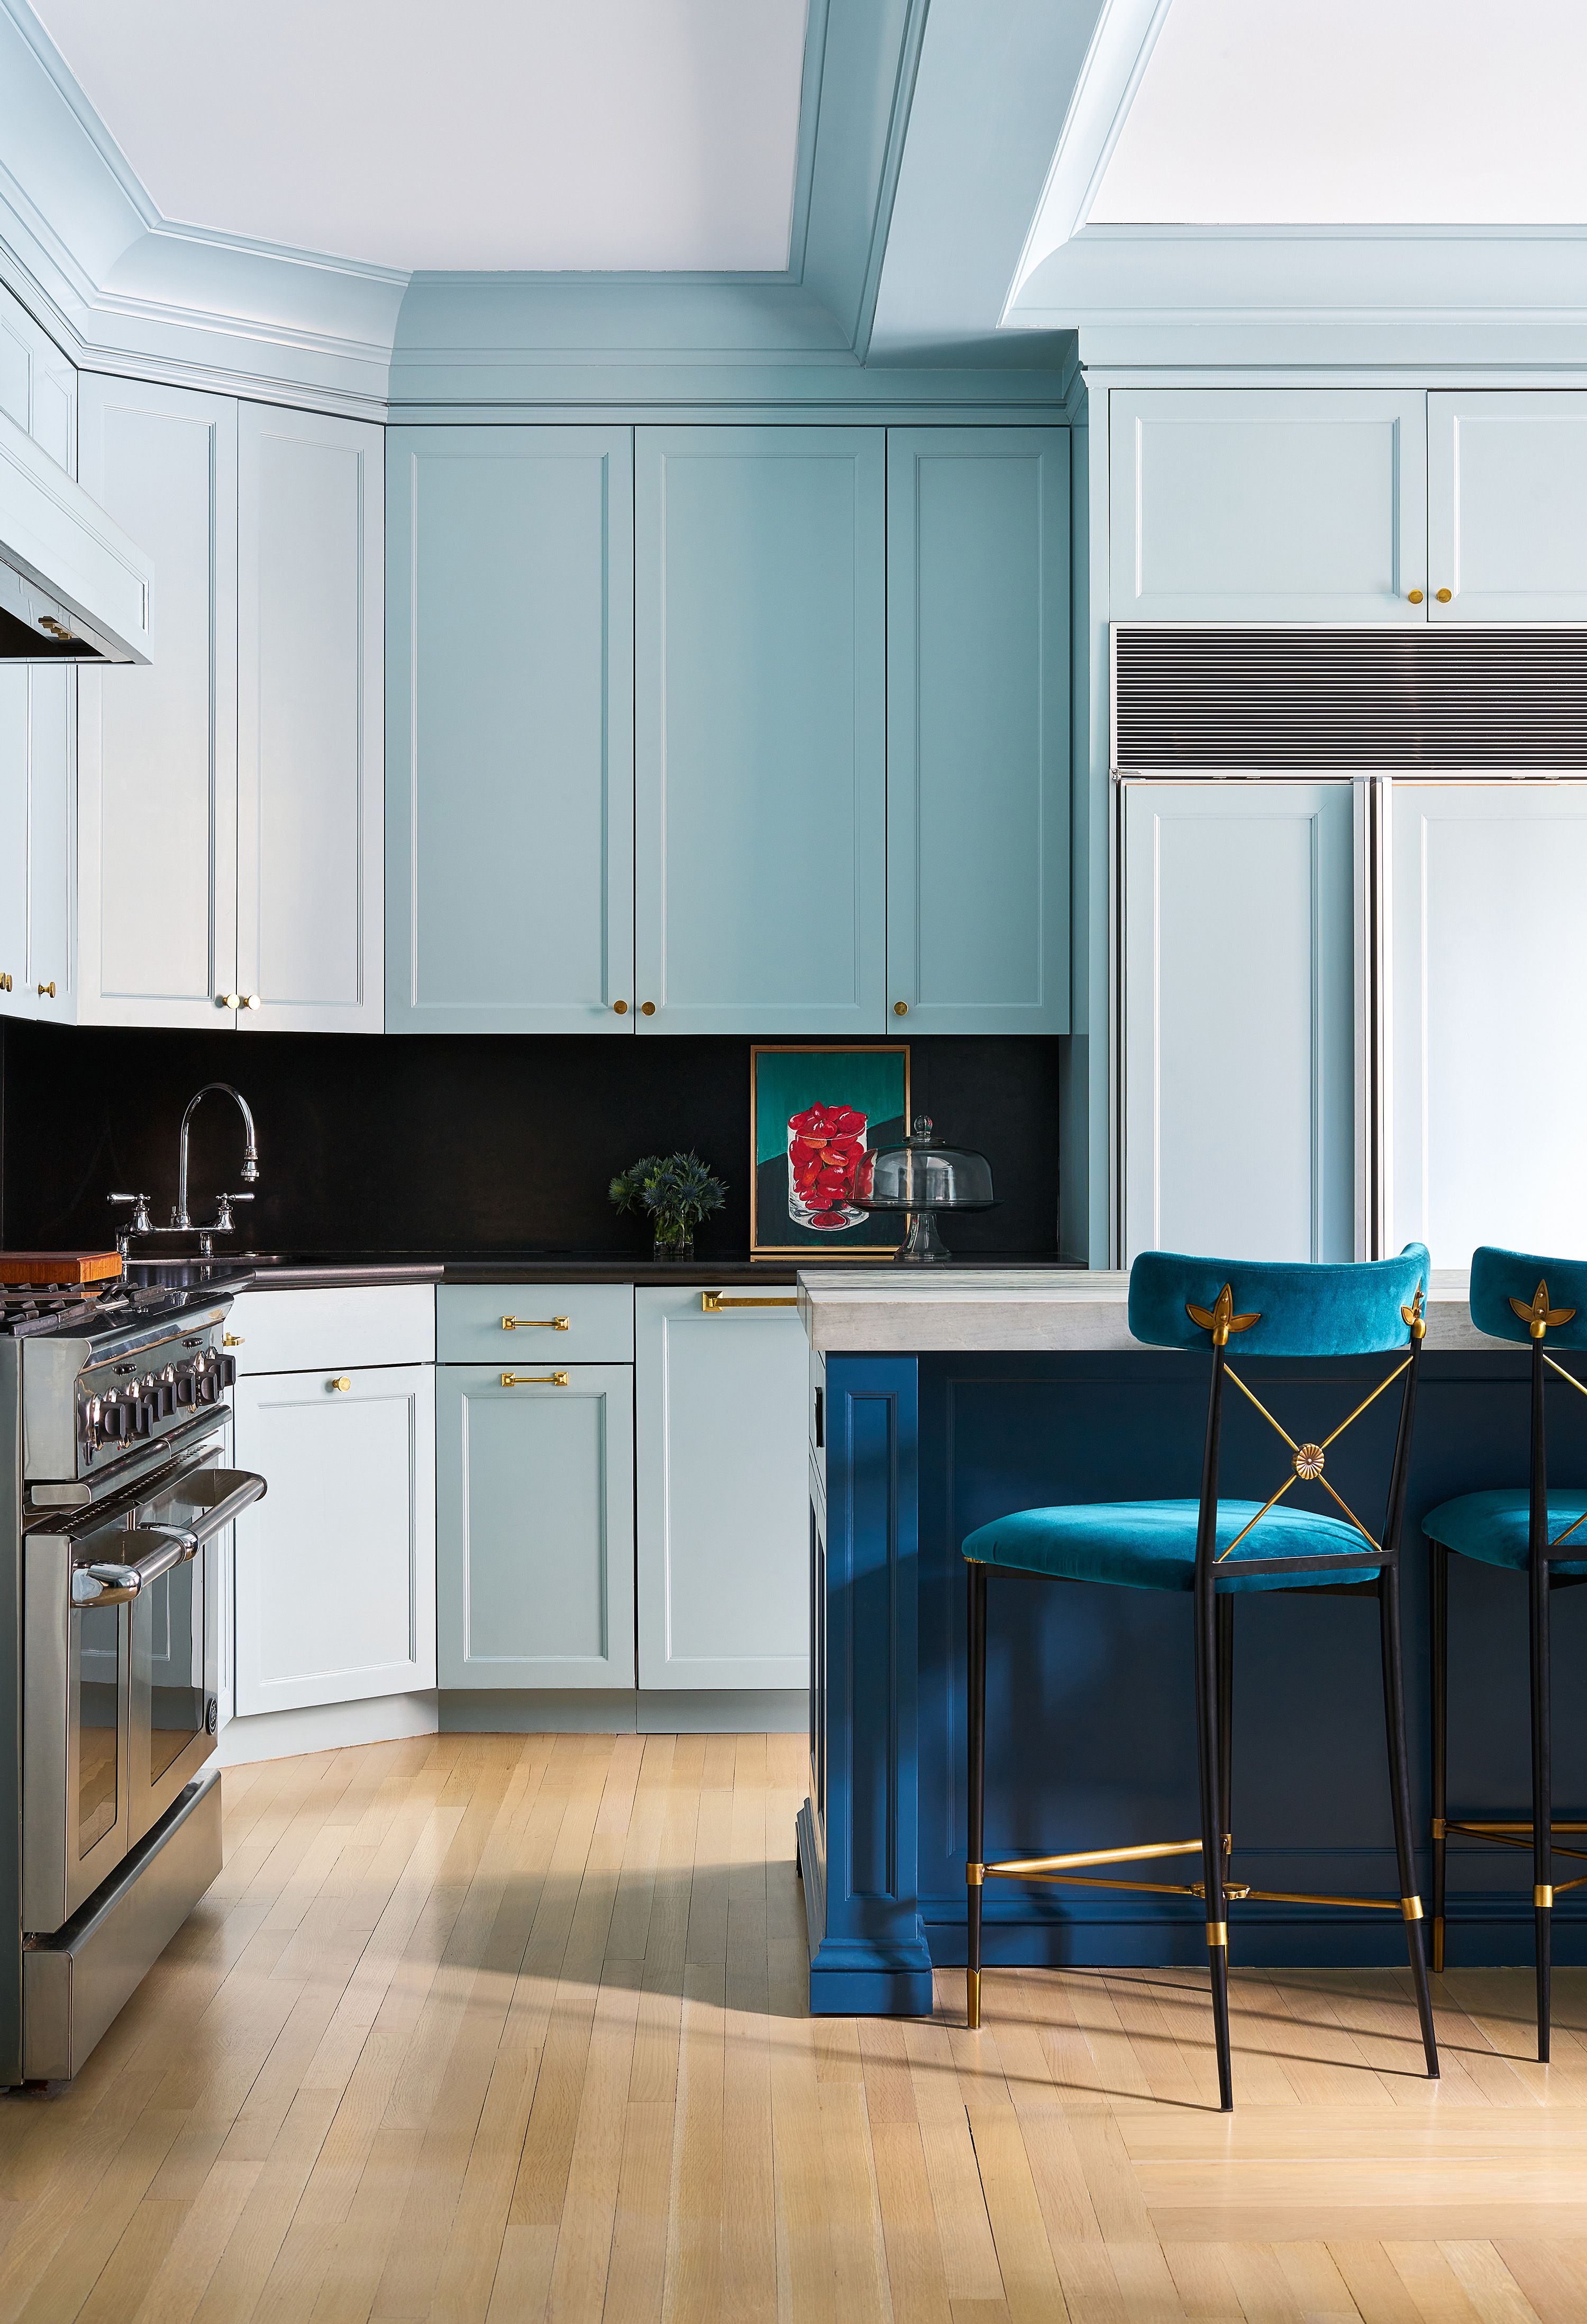 a bright kitchen with teal cabinets, mismatching tile backsplash